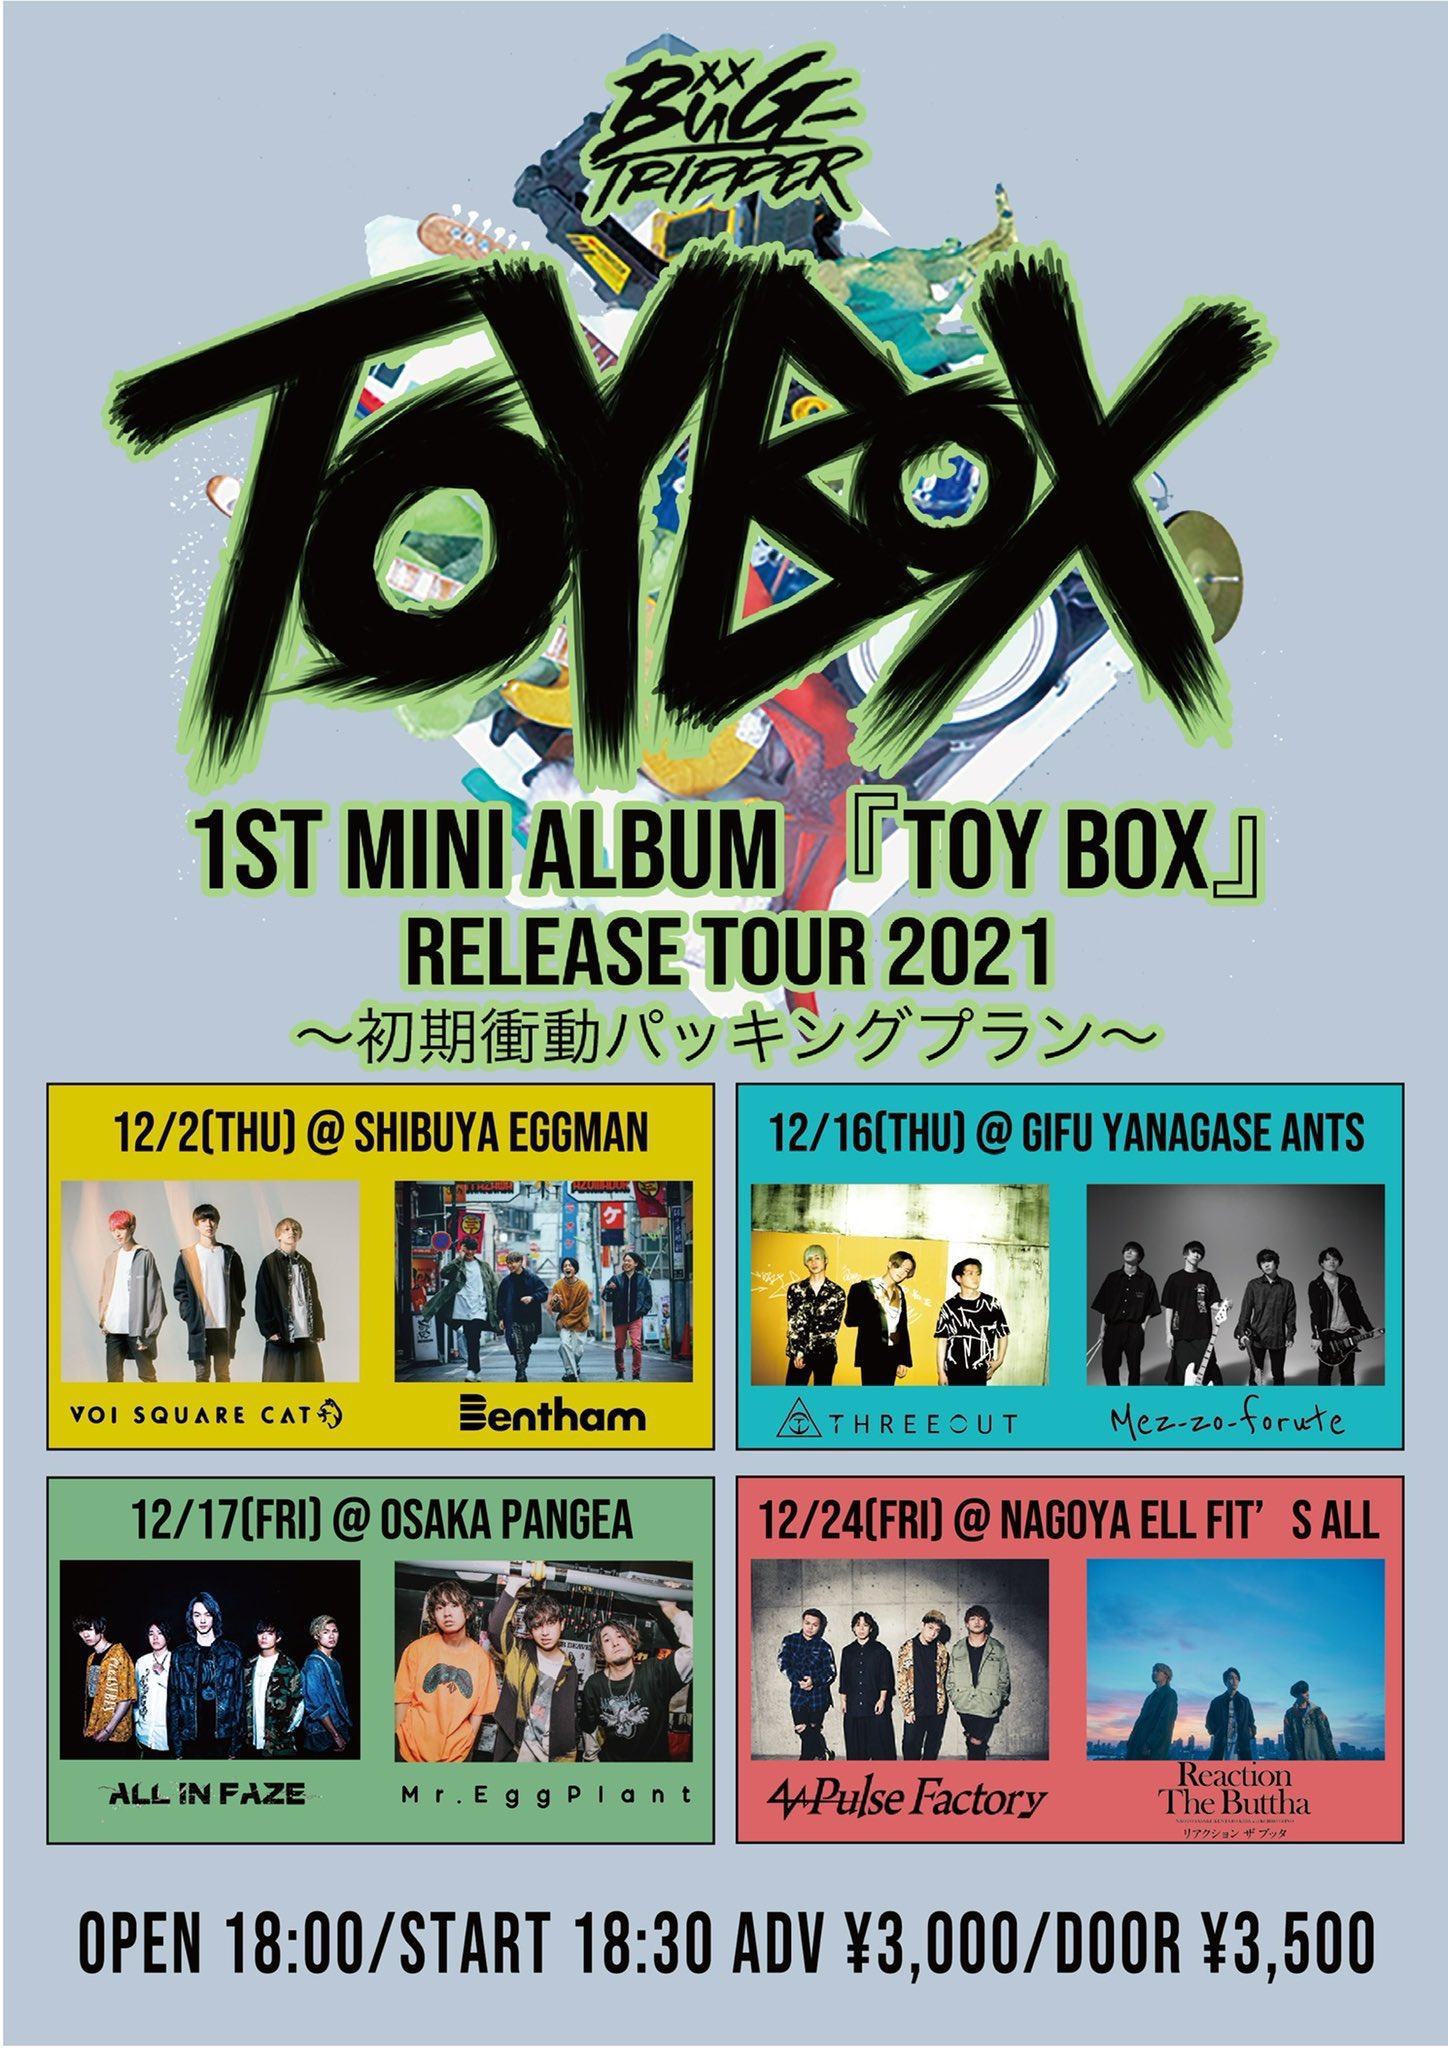 BüG-TRIPPER TOY BOX Release Tour